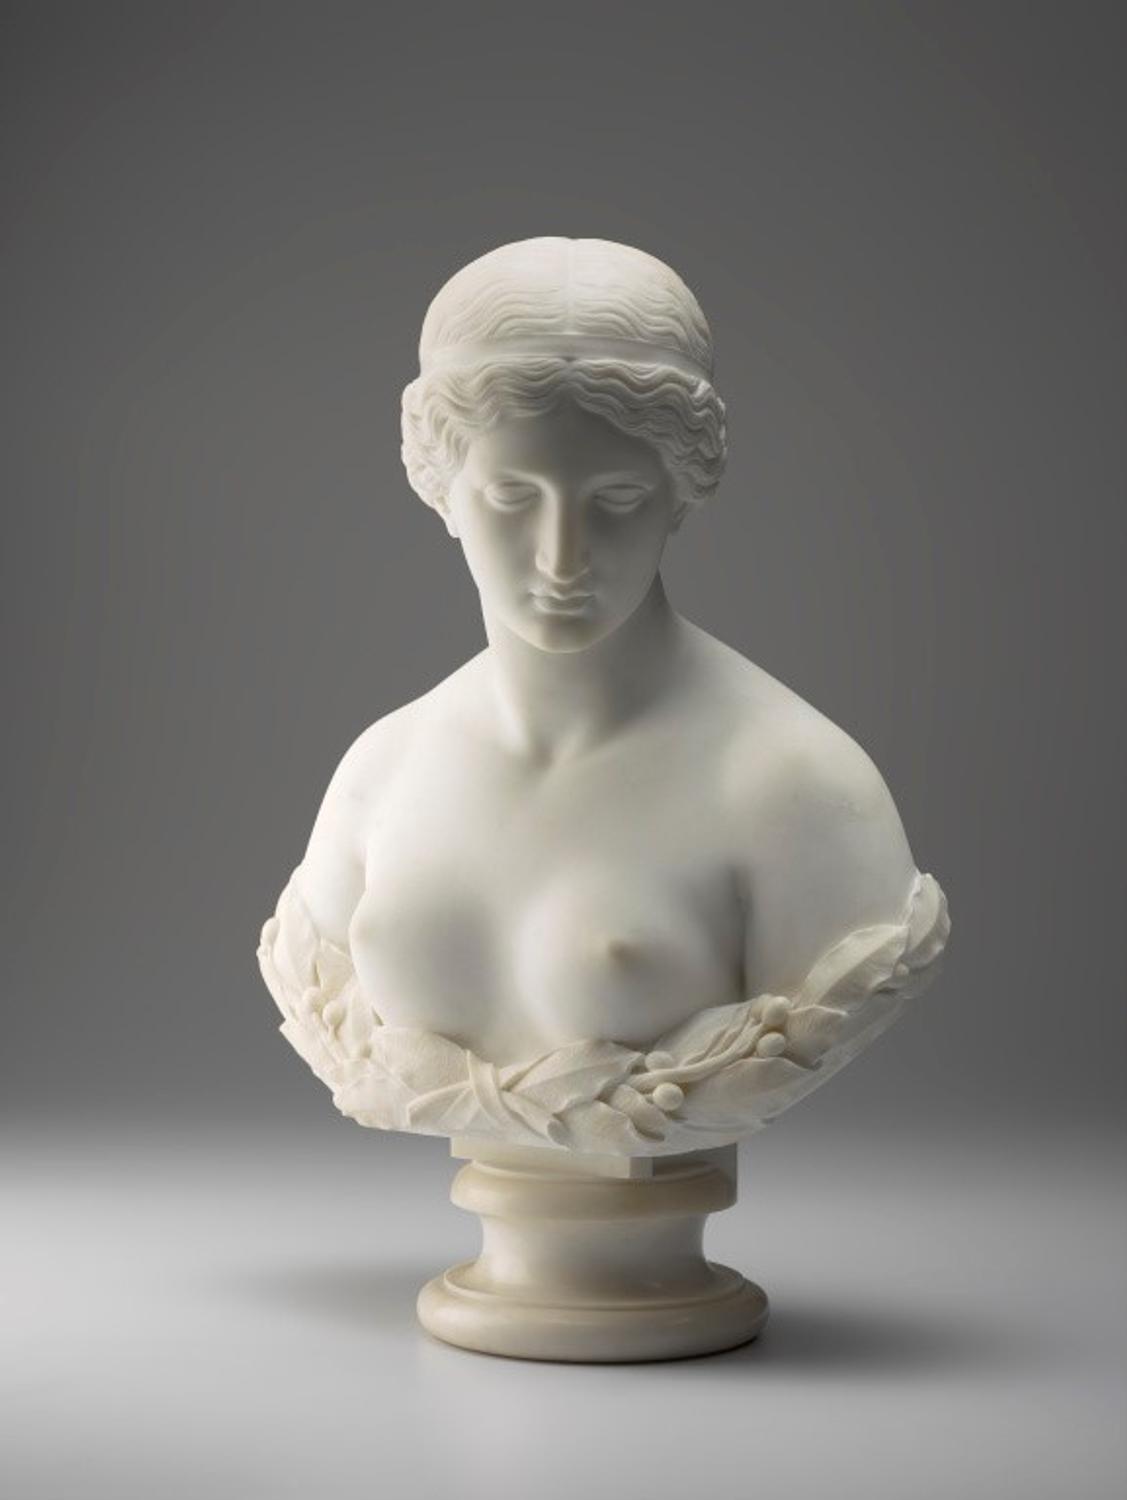 Daphne by Harriet Goodhue Hosmer - 1853'de modellenmiş, daha sonra oyulmuş - 71.7 x 52 x 31.8 cm 